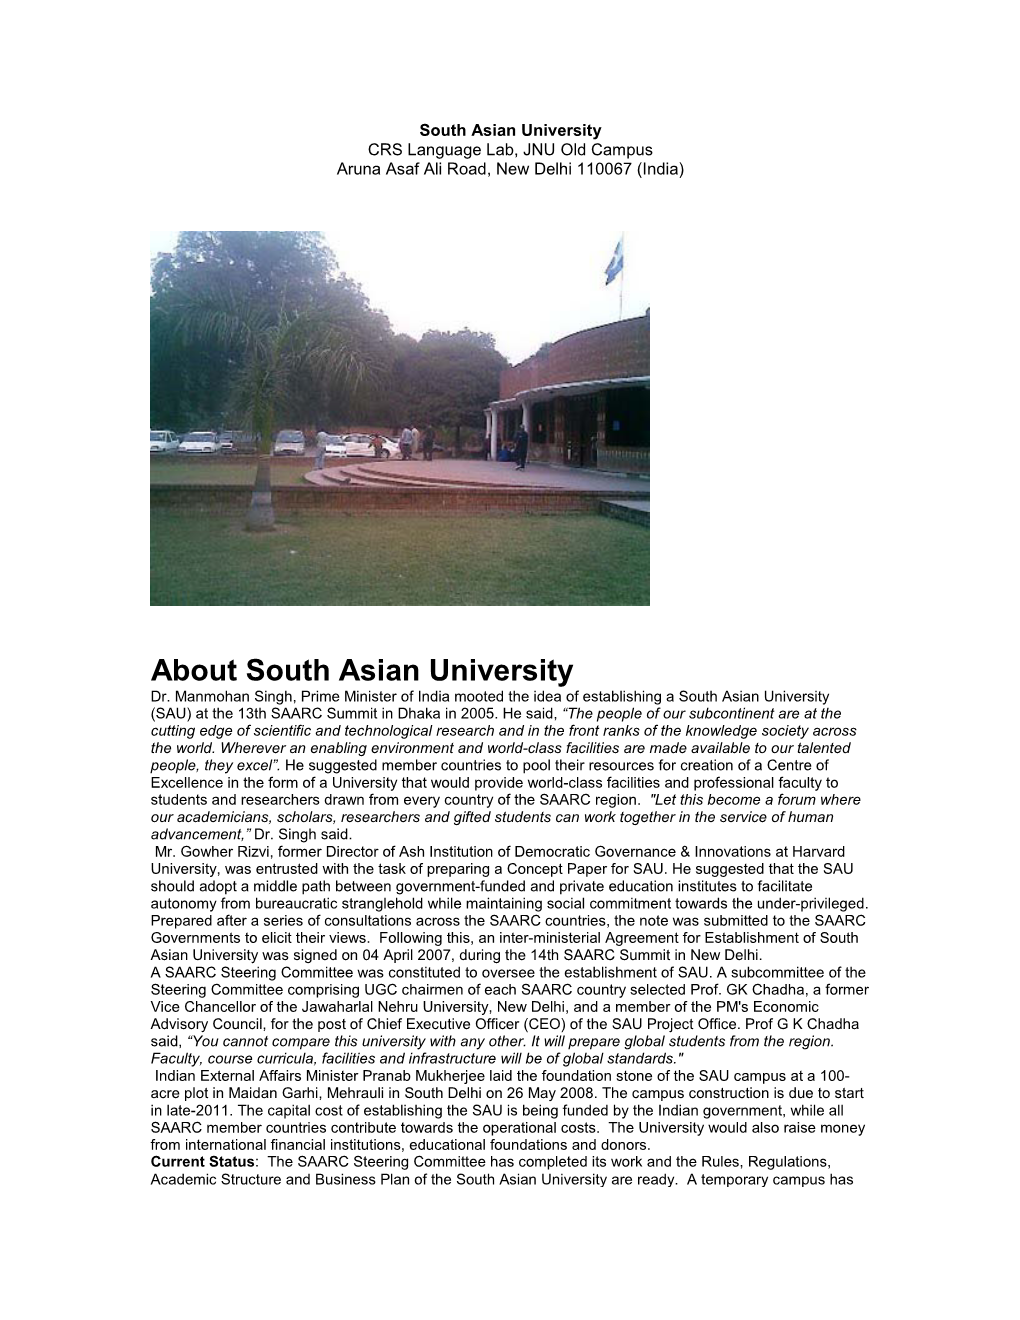 South Asian University CRS Language Lab, JNU Old Campus Aruna Asaf Ali Road, New Delhi 110067 (India)